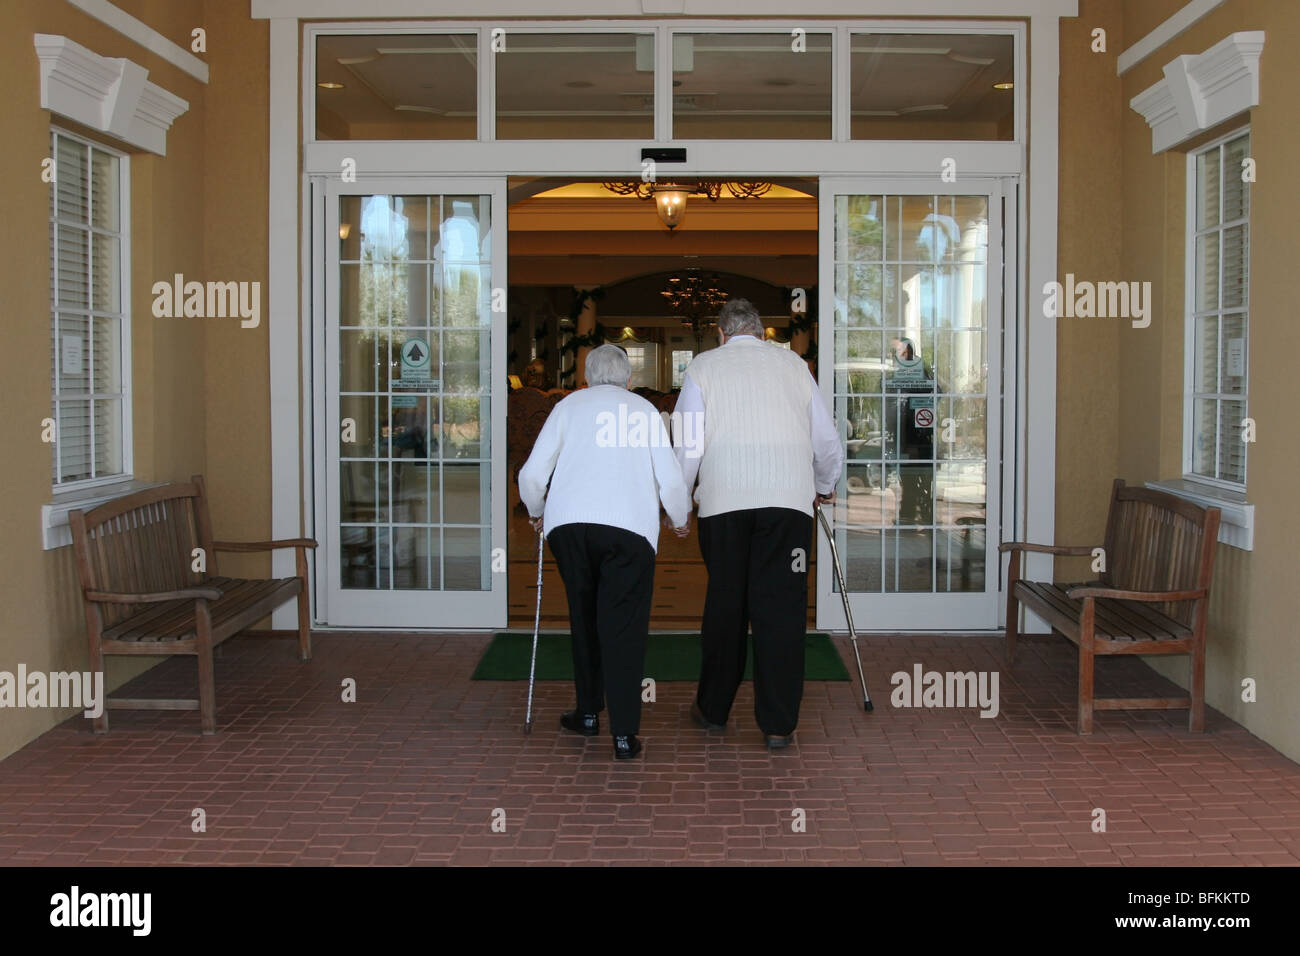 Two senior citizens entering a building Stock Photo